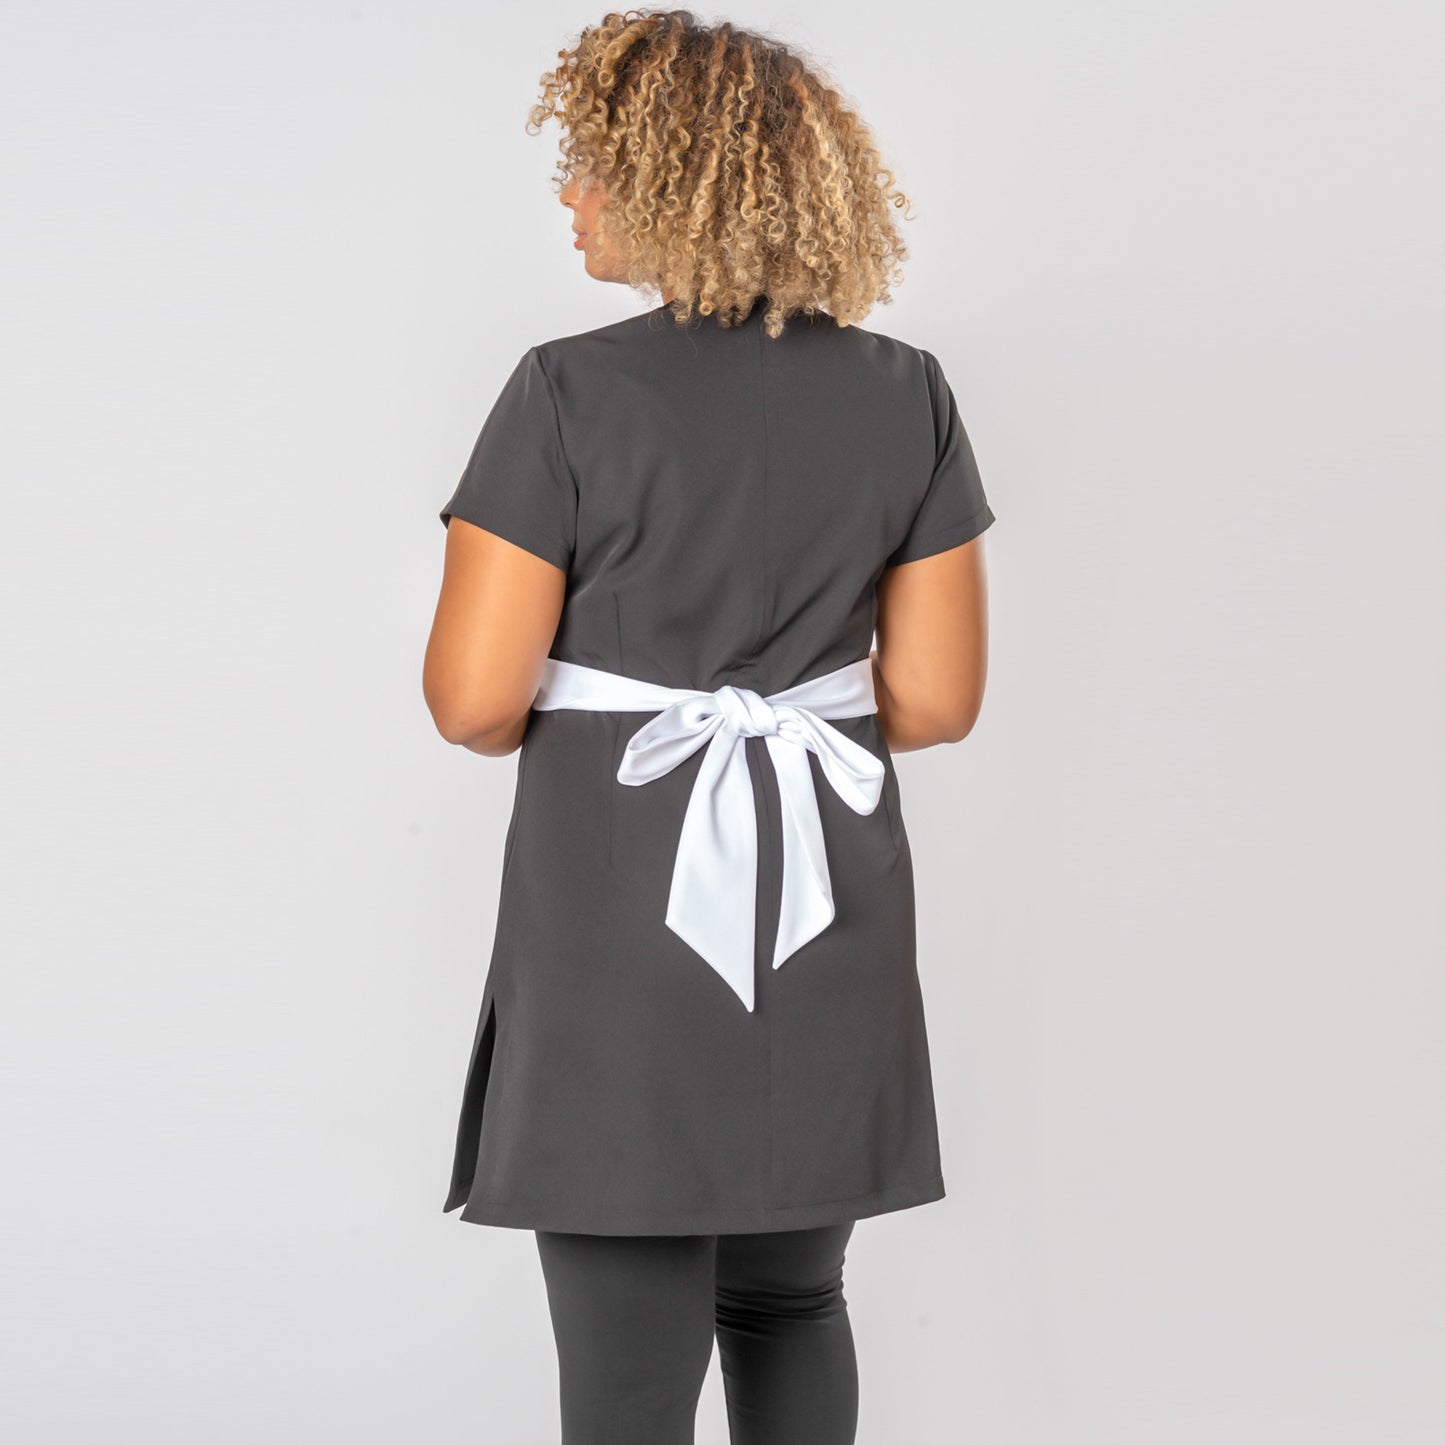 Sash Tie Obi Fabric Belt for Beauty Tunic  Wrap Around Sash Belts Online –  Uniforms4Healthcare